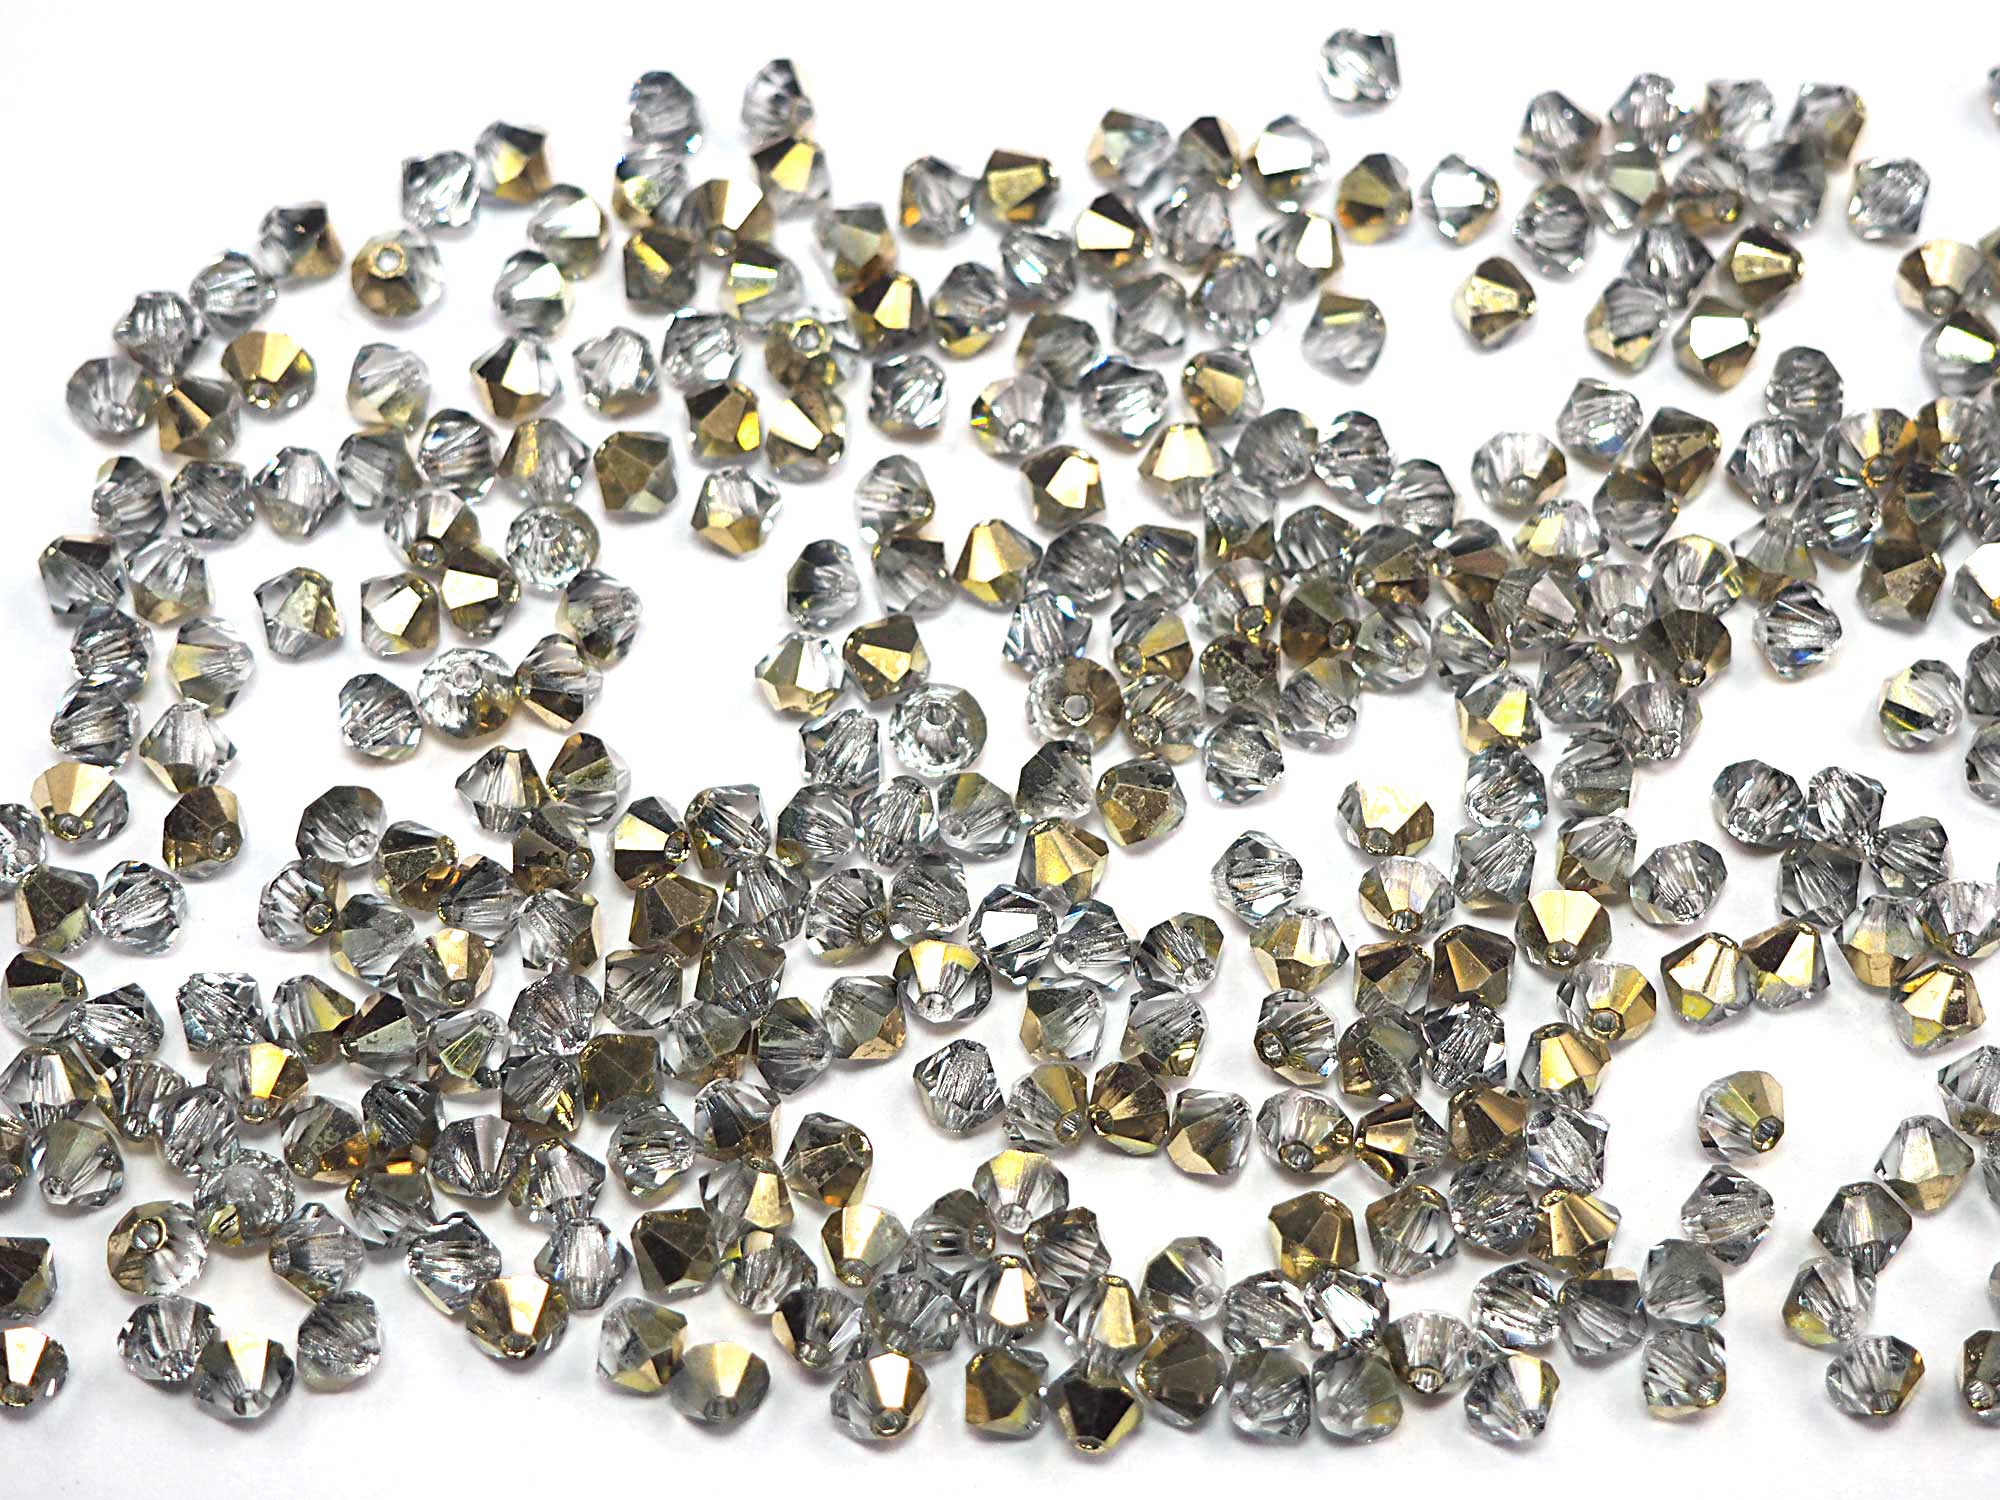 Crystal Aureate 1-sided Half coat, Czech Glass Beads, Machine Cut Bicones (MC Rondell, Diamond Shape), clear crystals half coated with apollo aurum gold